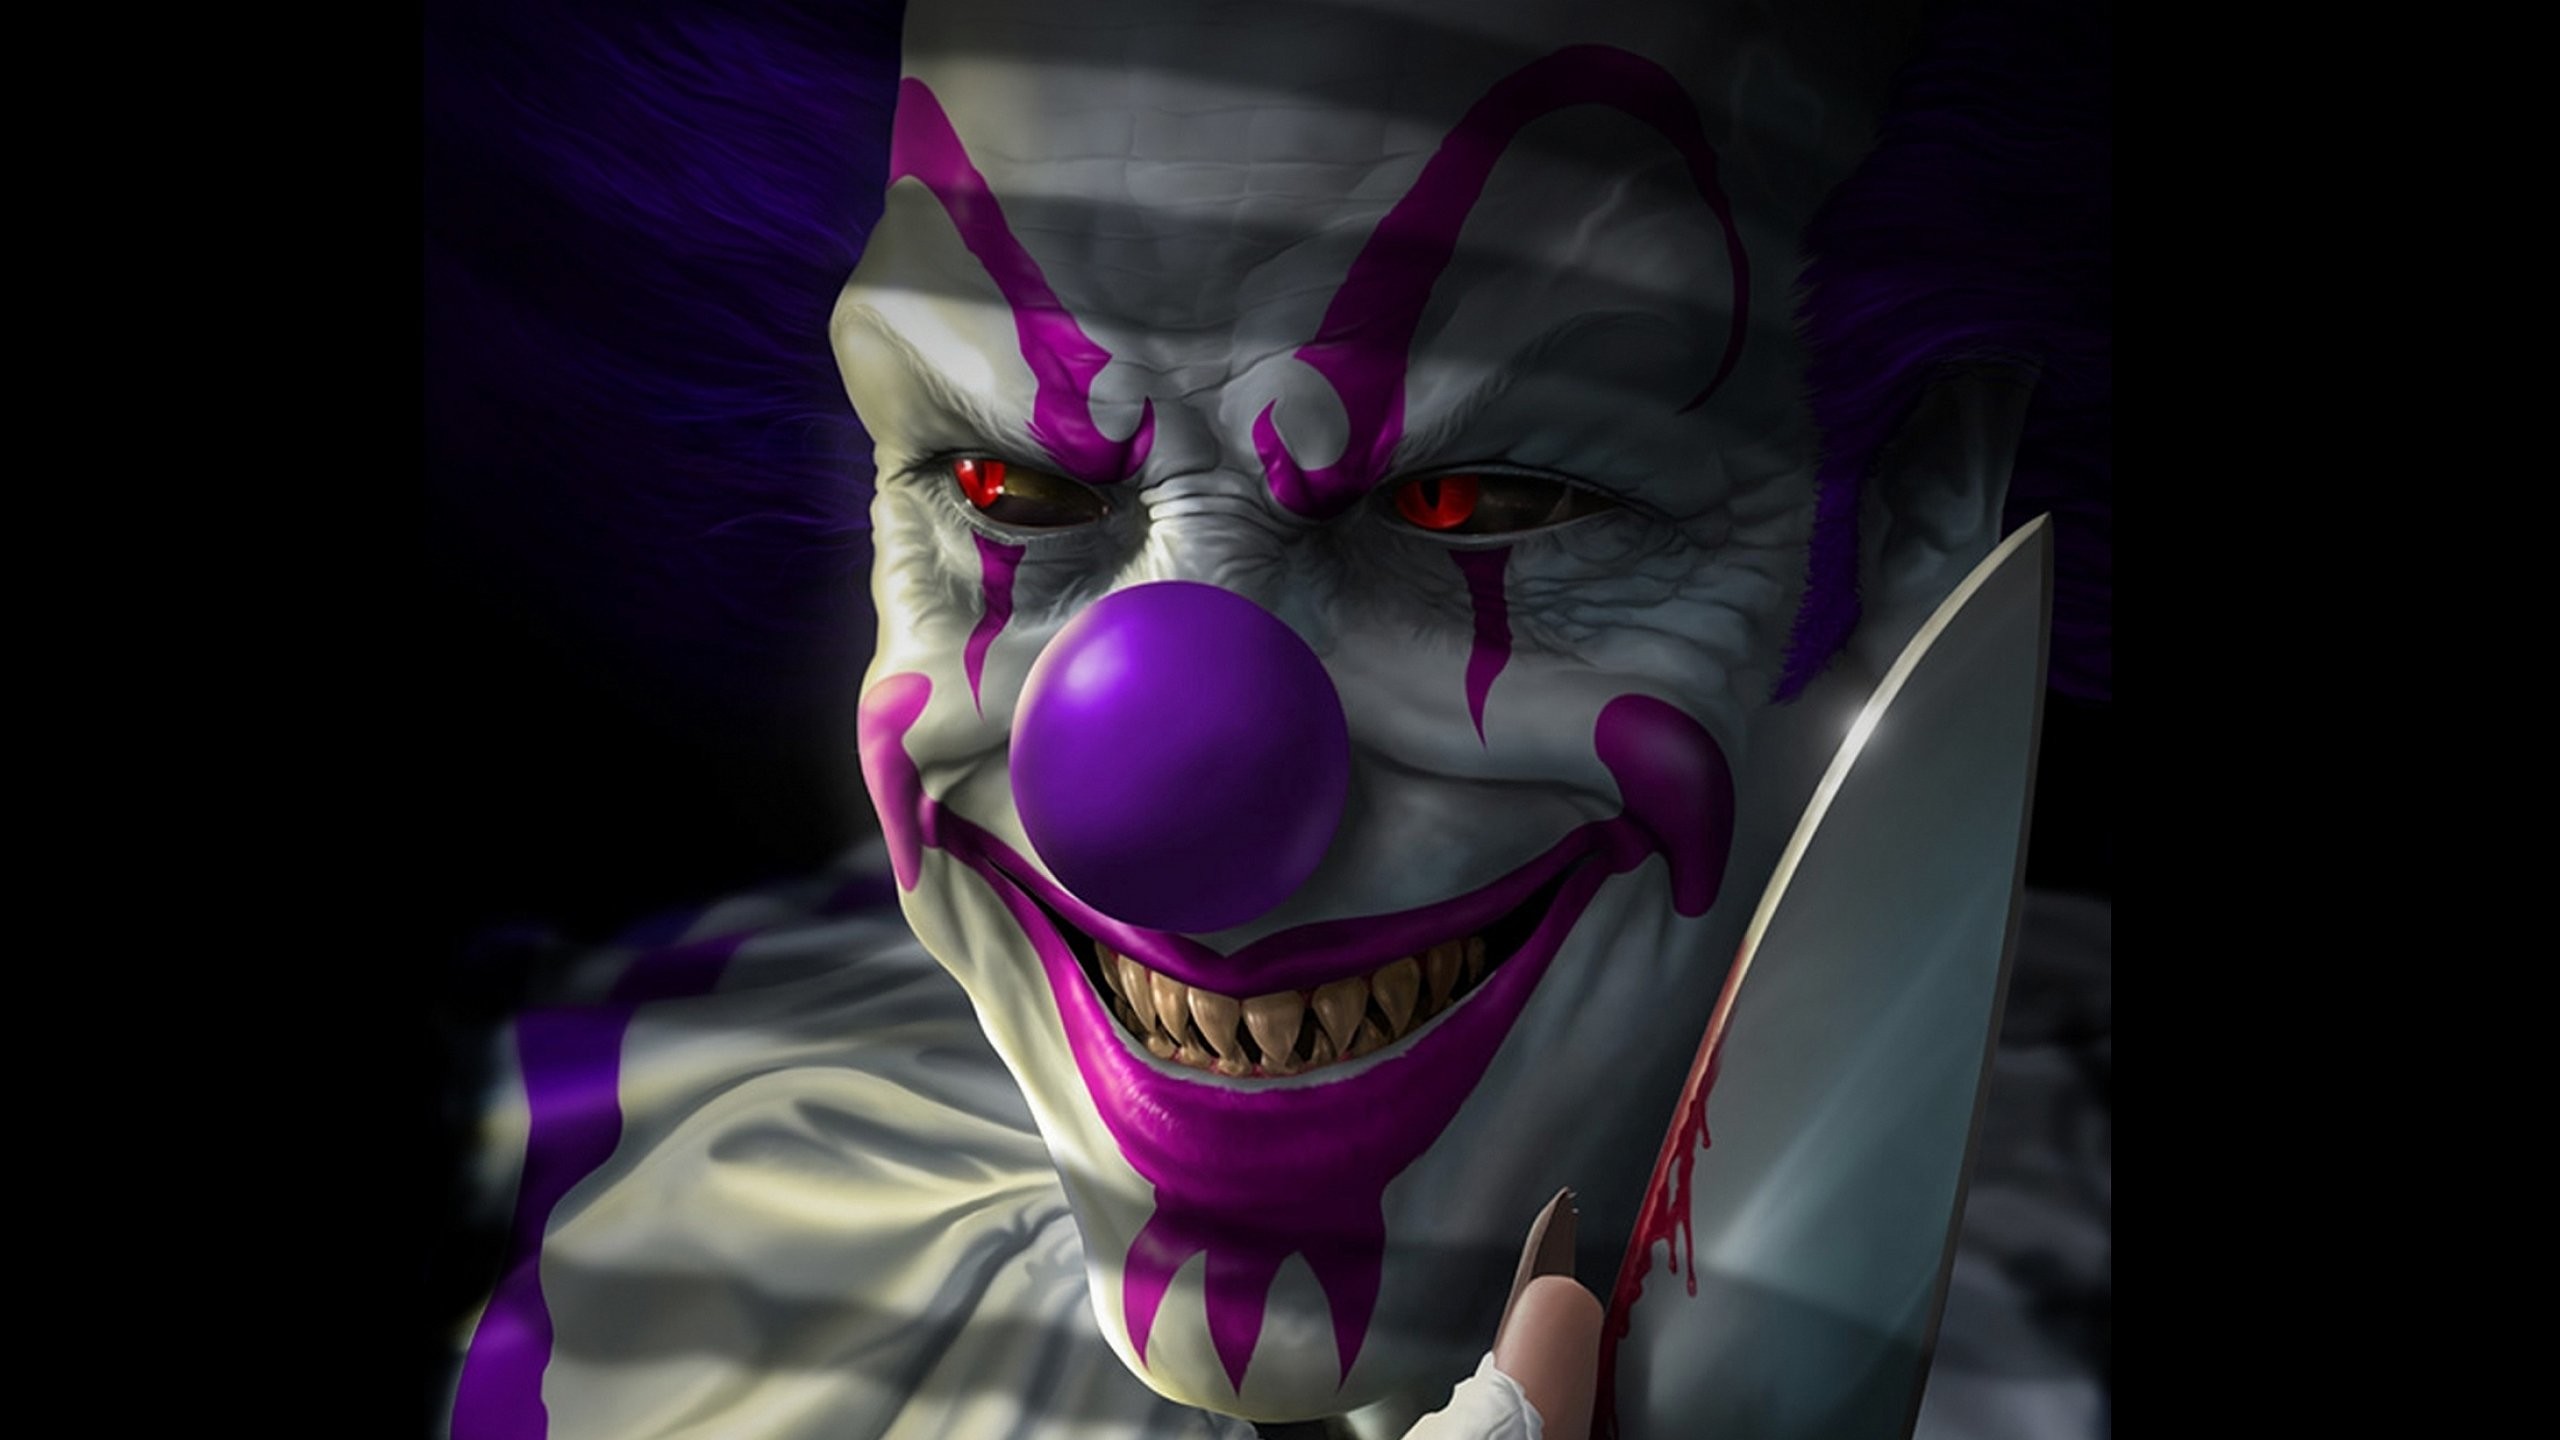 2560x1440 Scary Clown Wallpaper Free